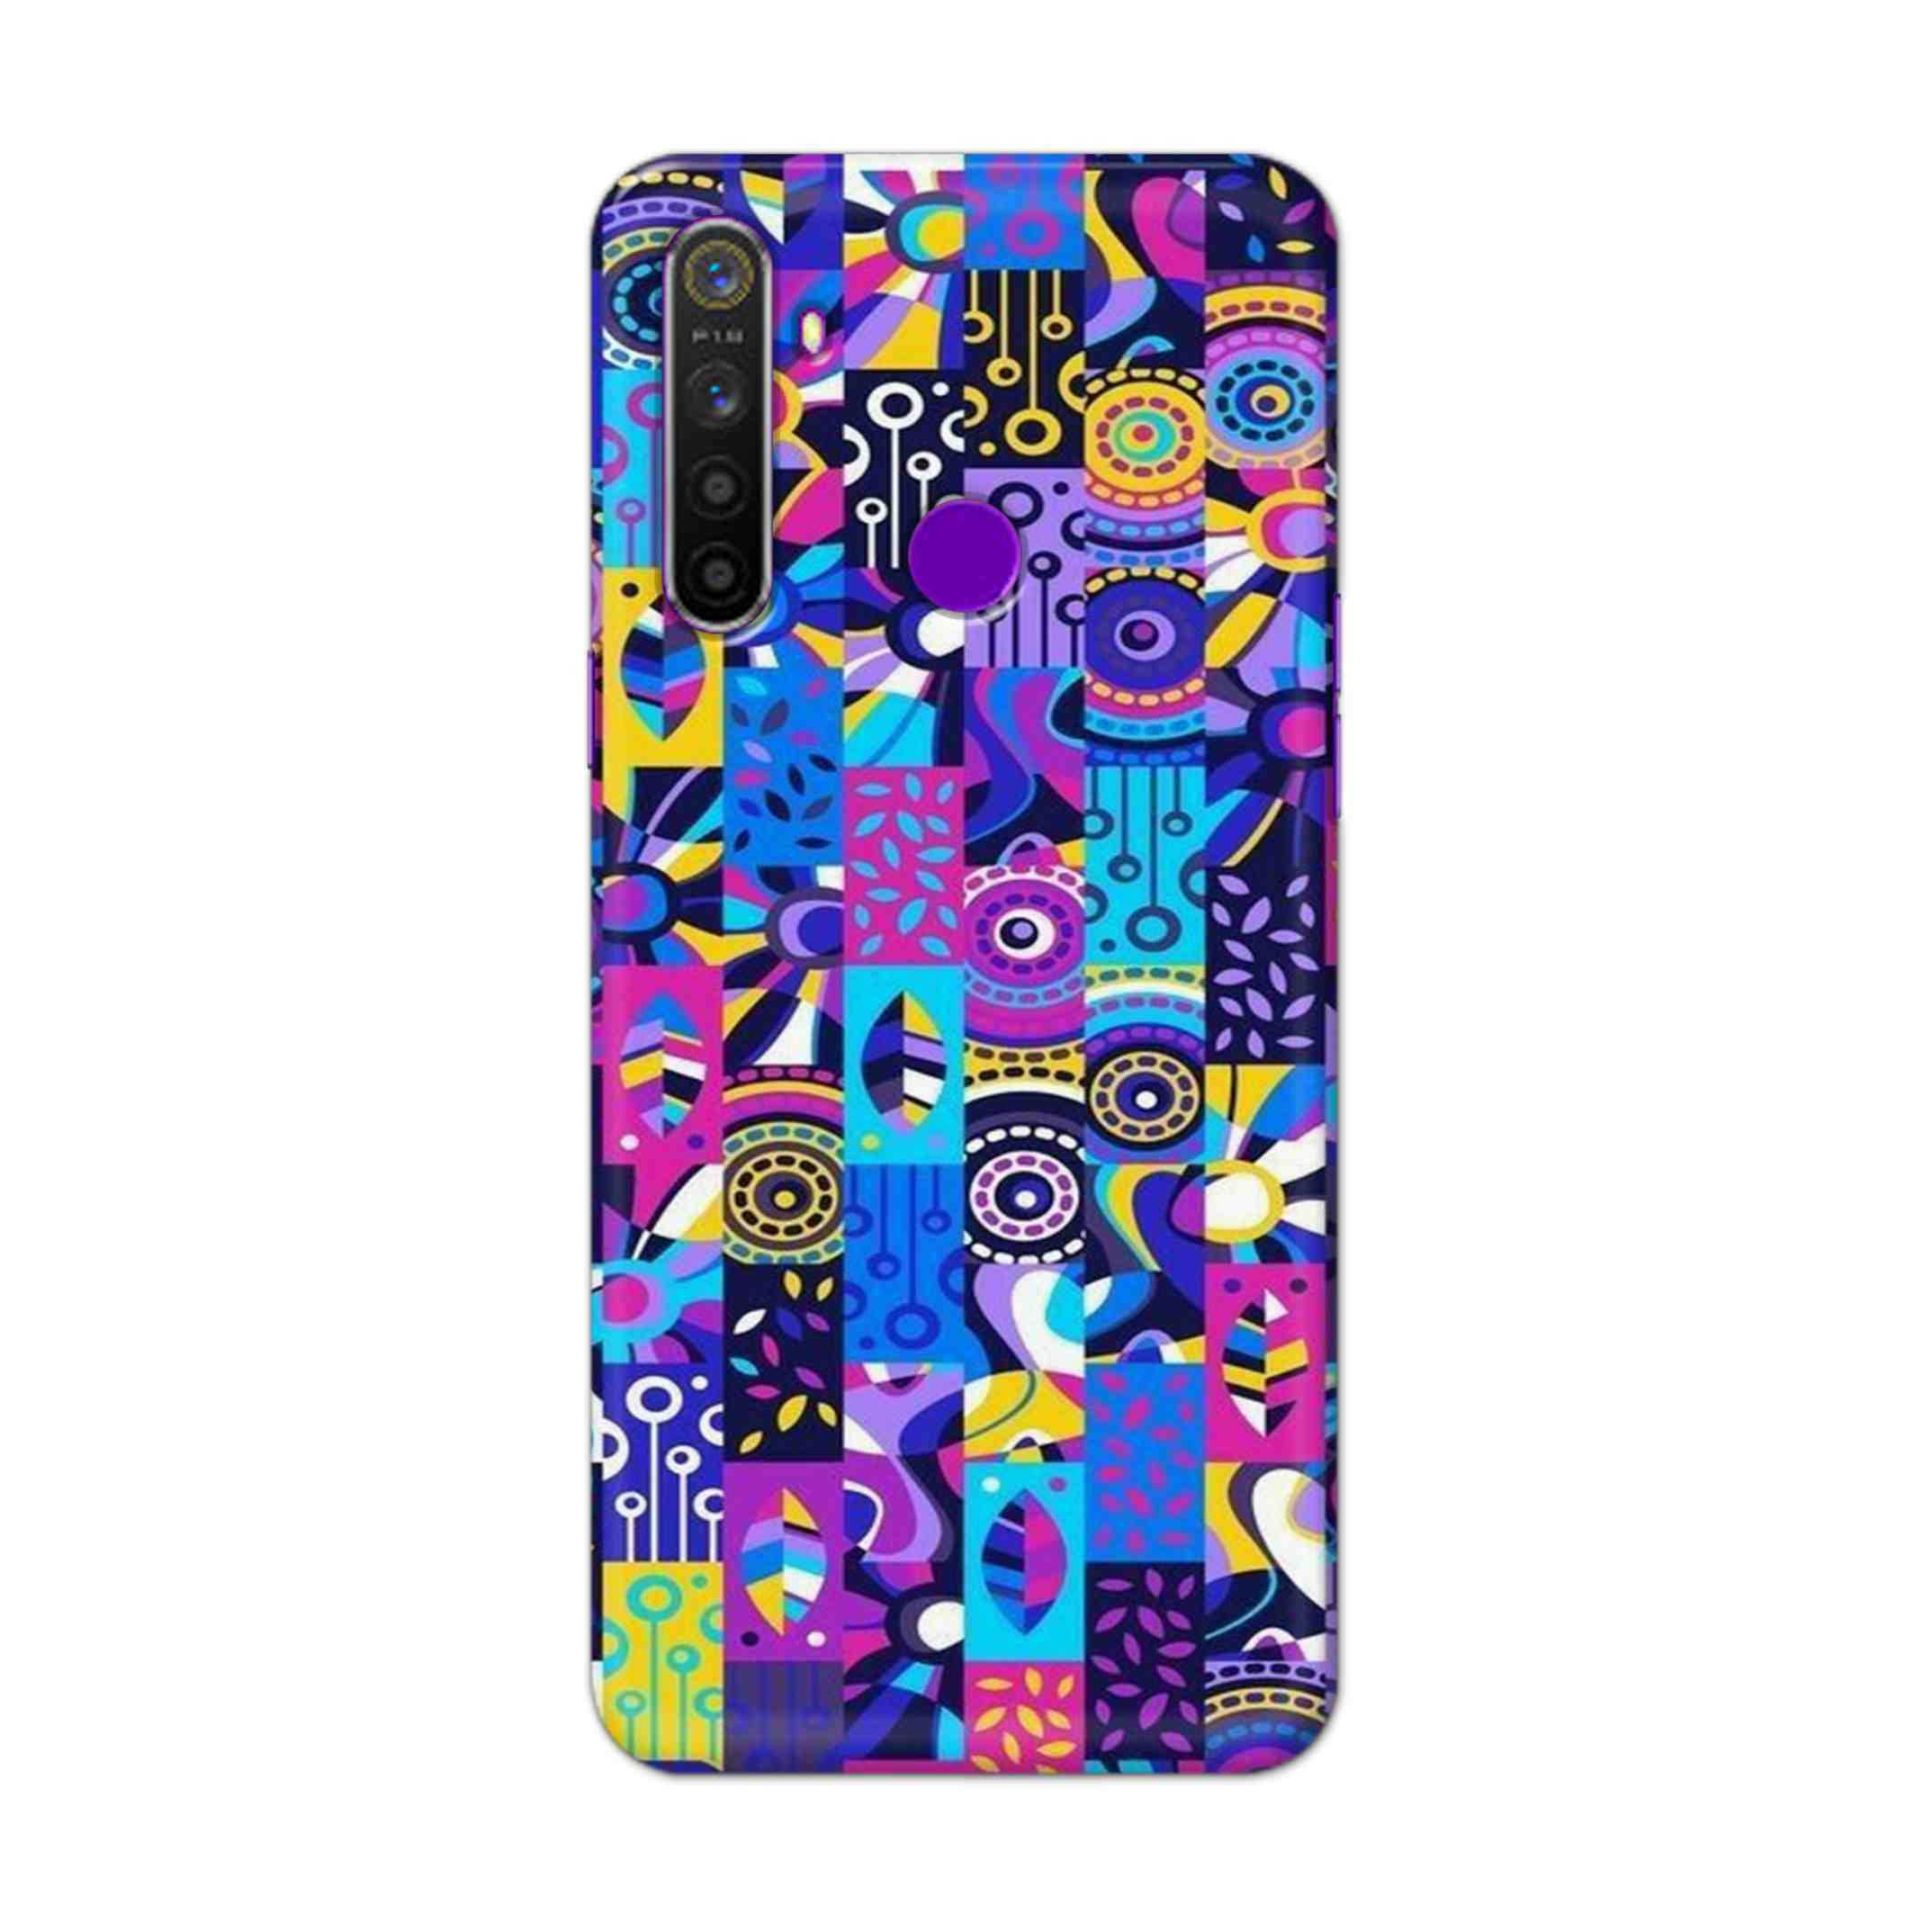 Buy Rainbow Art Hard Back Mobile Phone Case Cover For Realme 5 Online